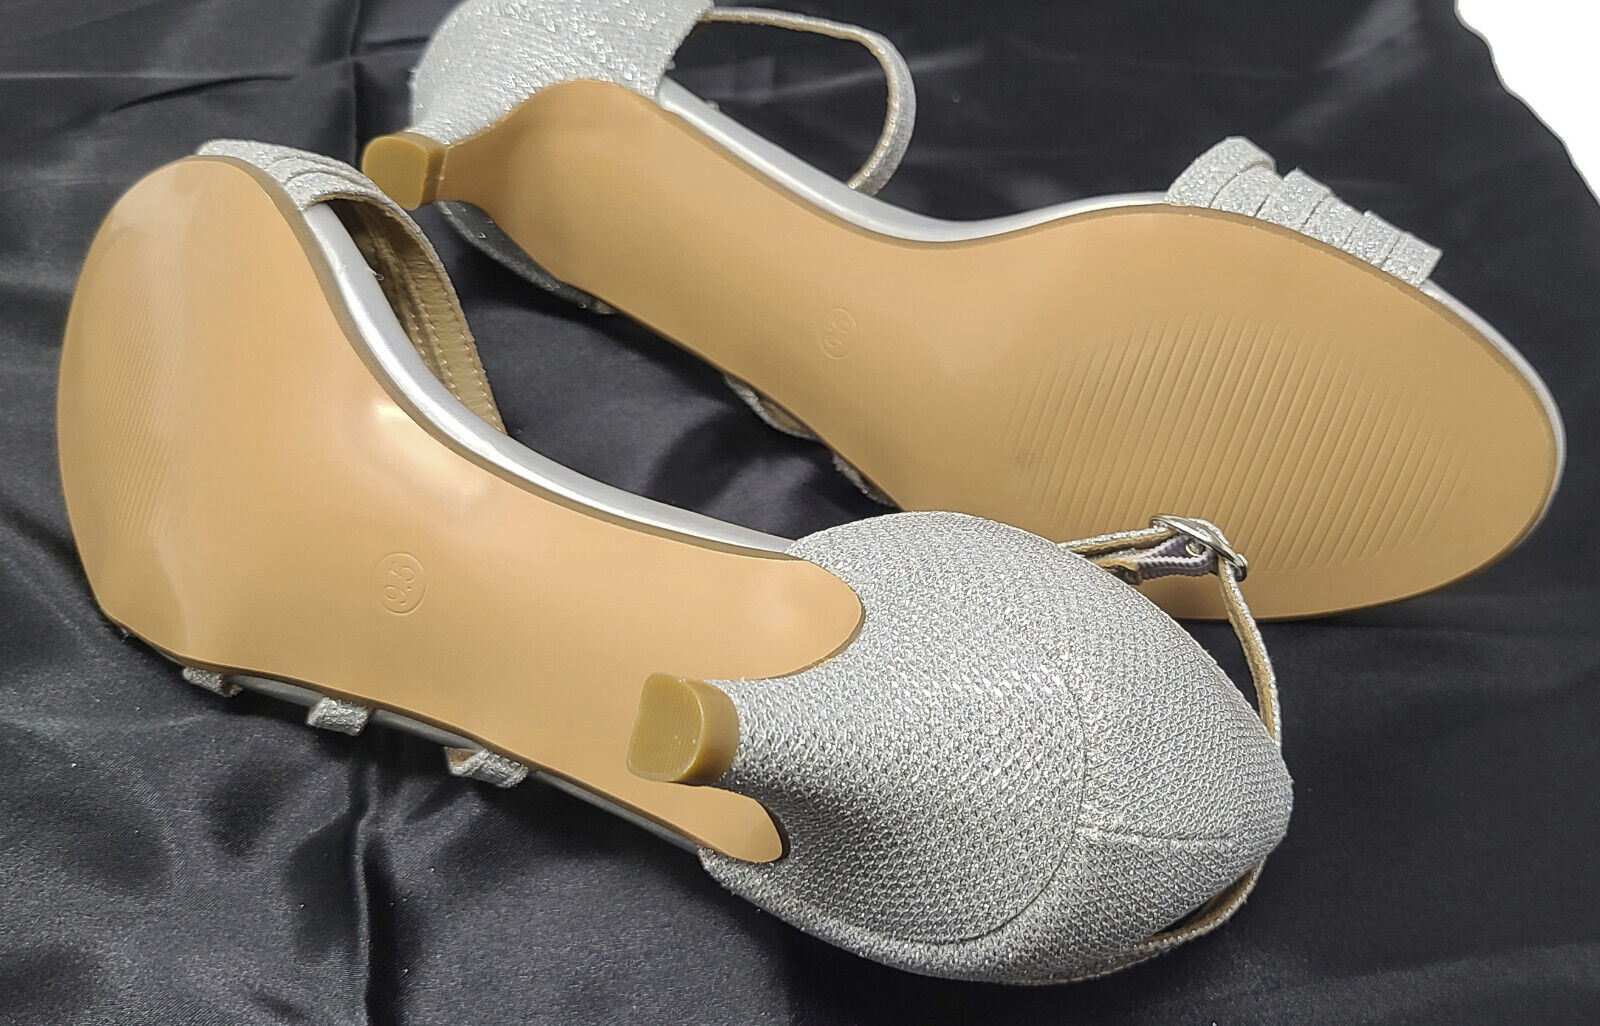 IDIFU Safina 2 Inch High Heels HEELED Sandals Dress Shoes SILVER